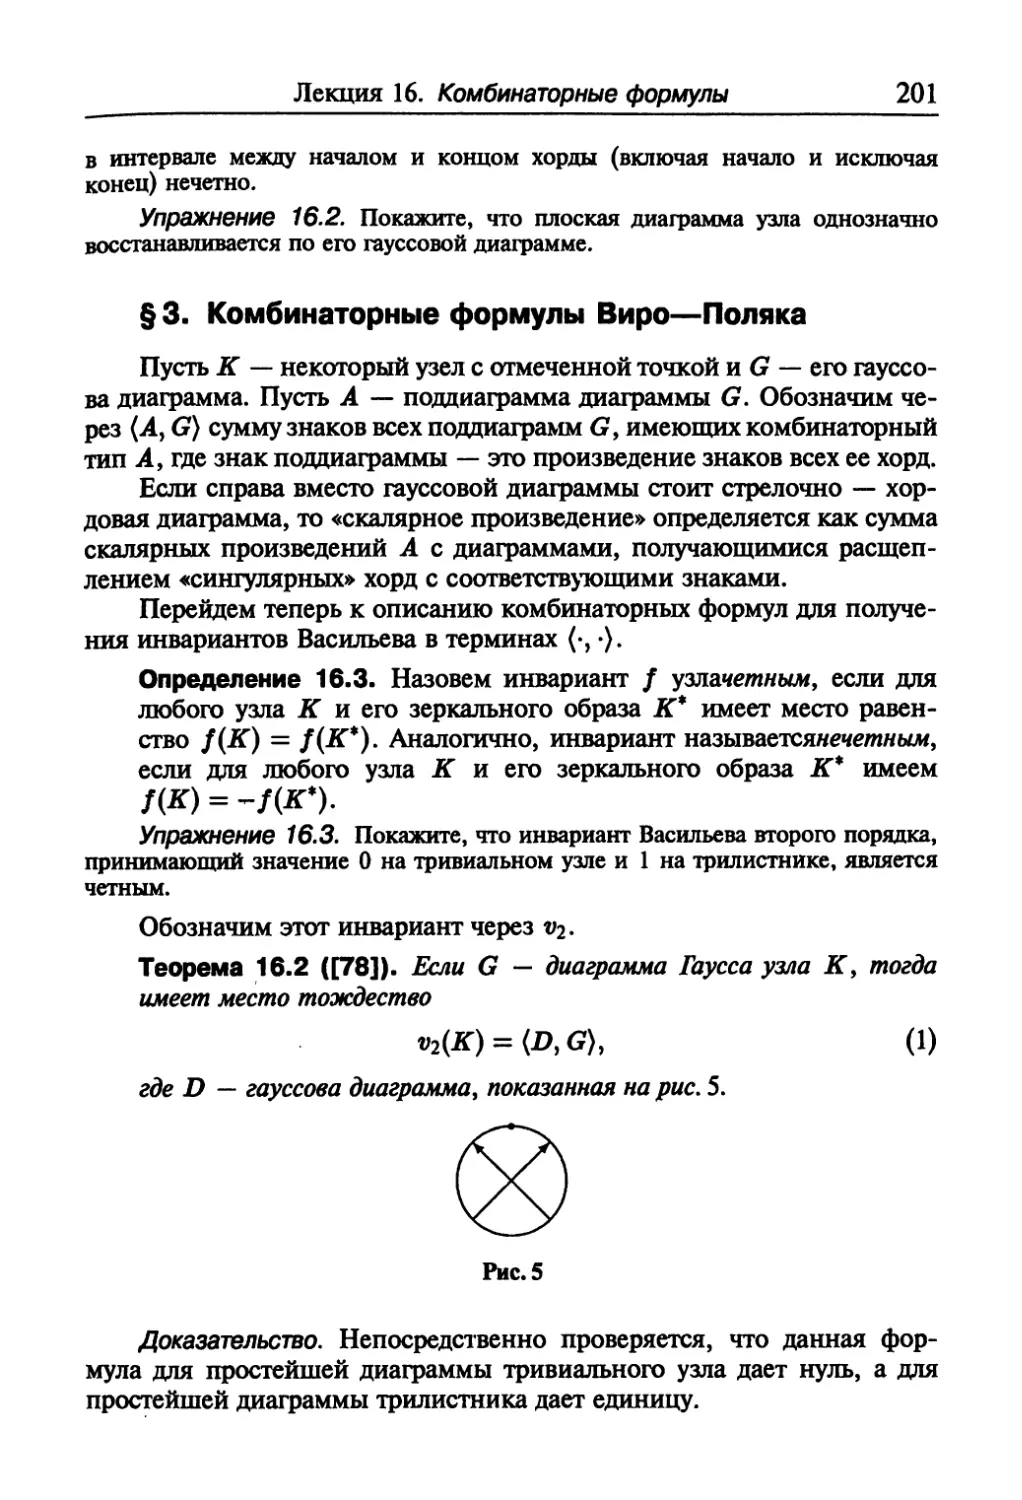 § 3. Комбинаторные формулы Виро—Поляка